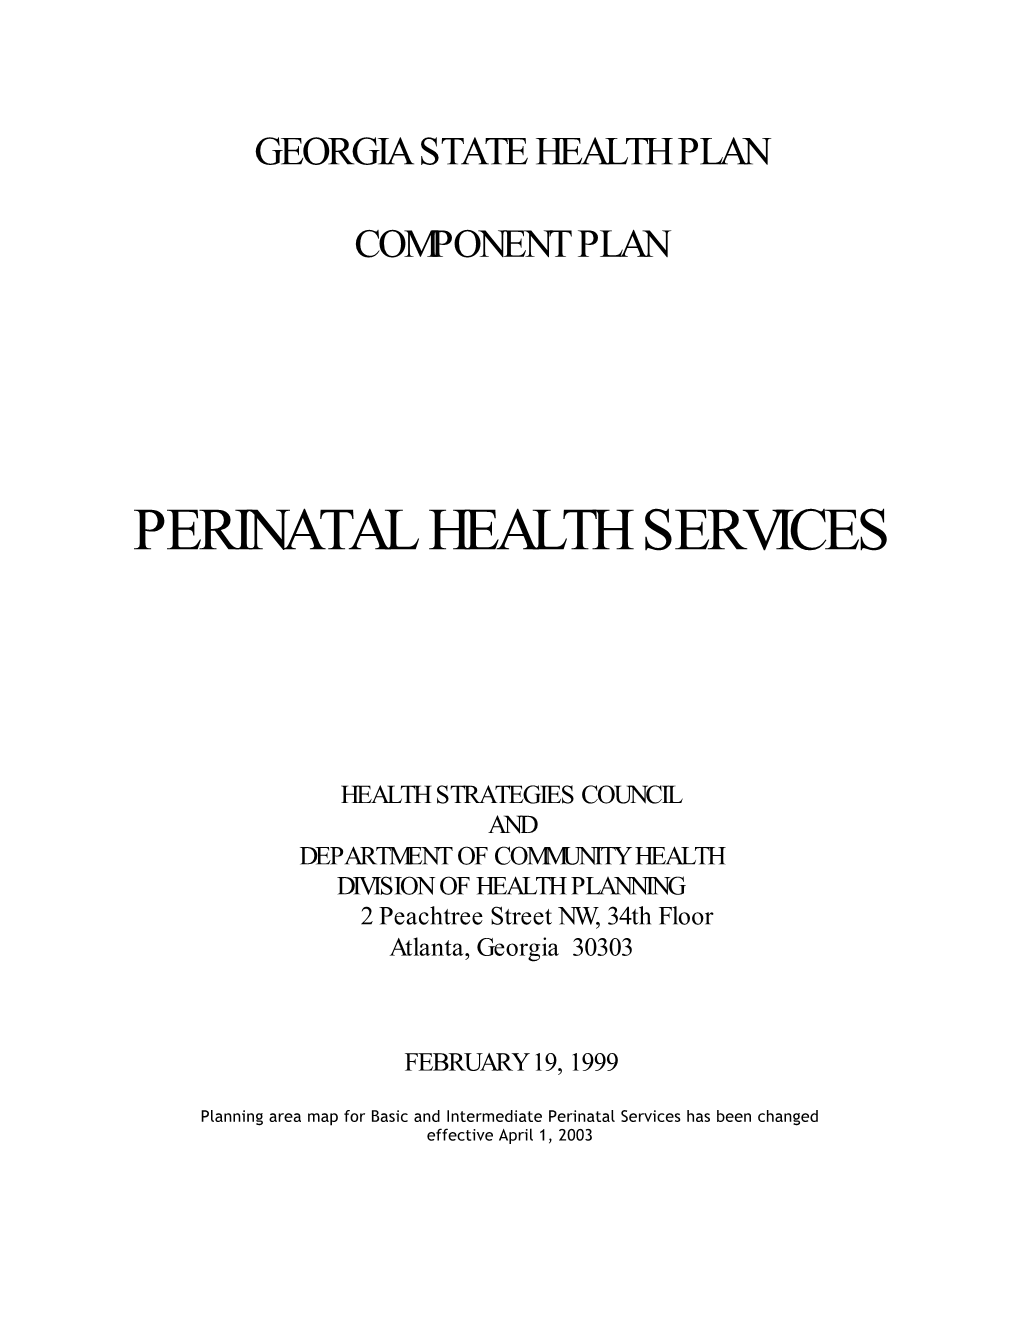 Perinatal Health Services Component Plan